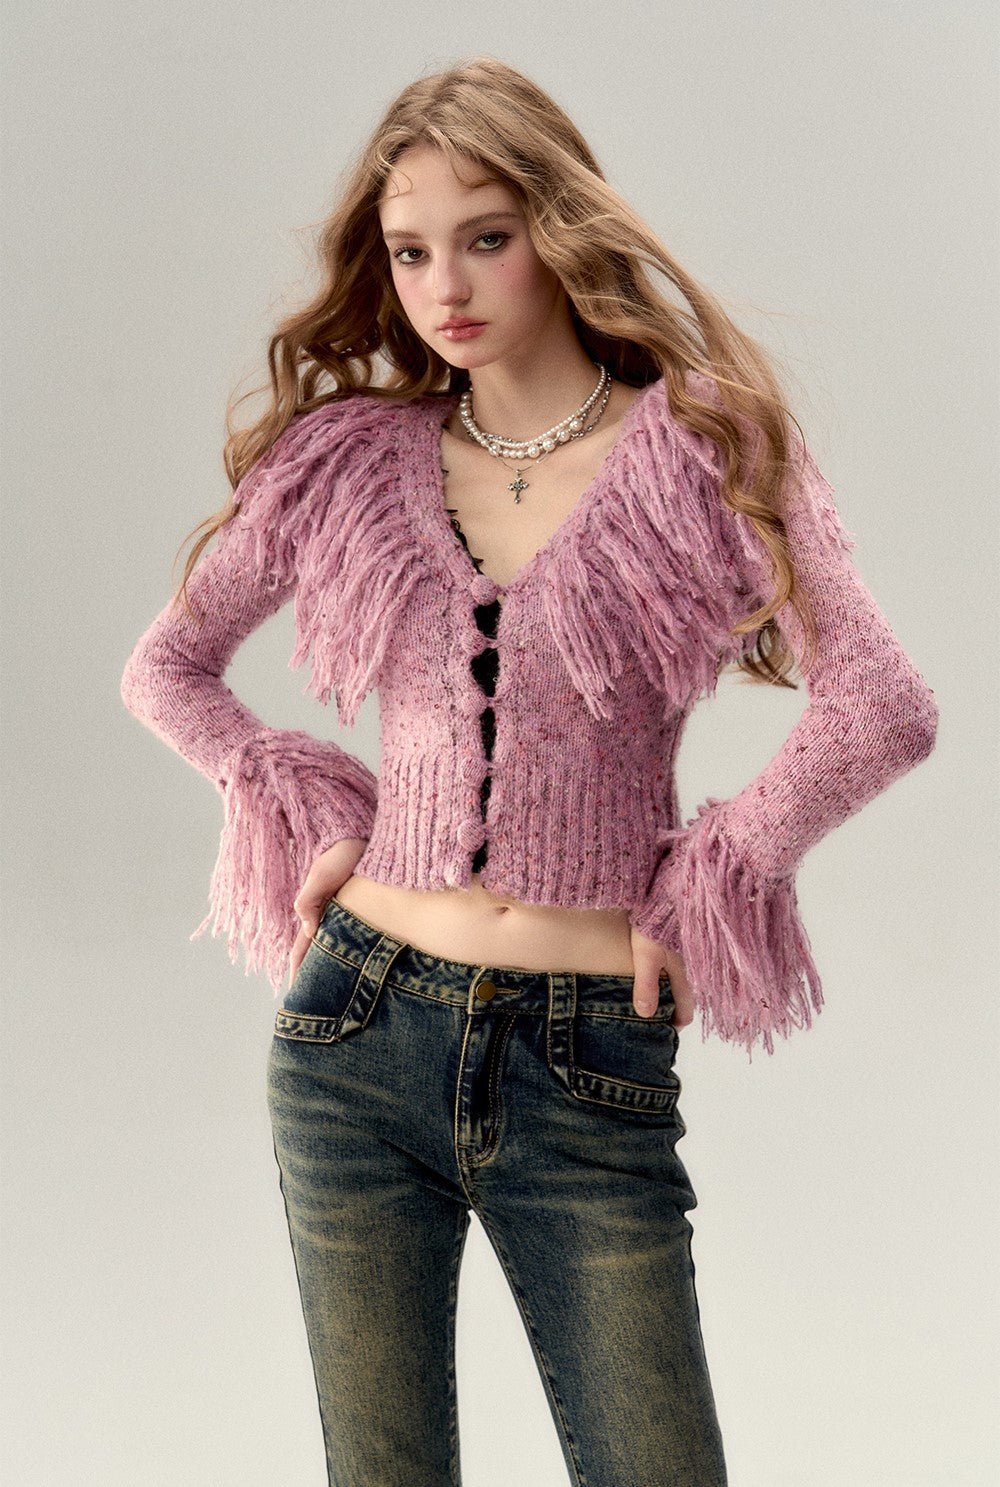 Tassel Colorful Knit Sweater Cardigan VIA0015